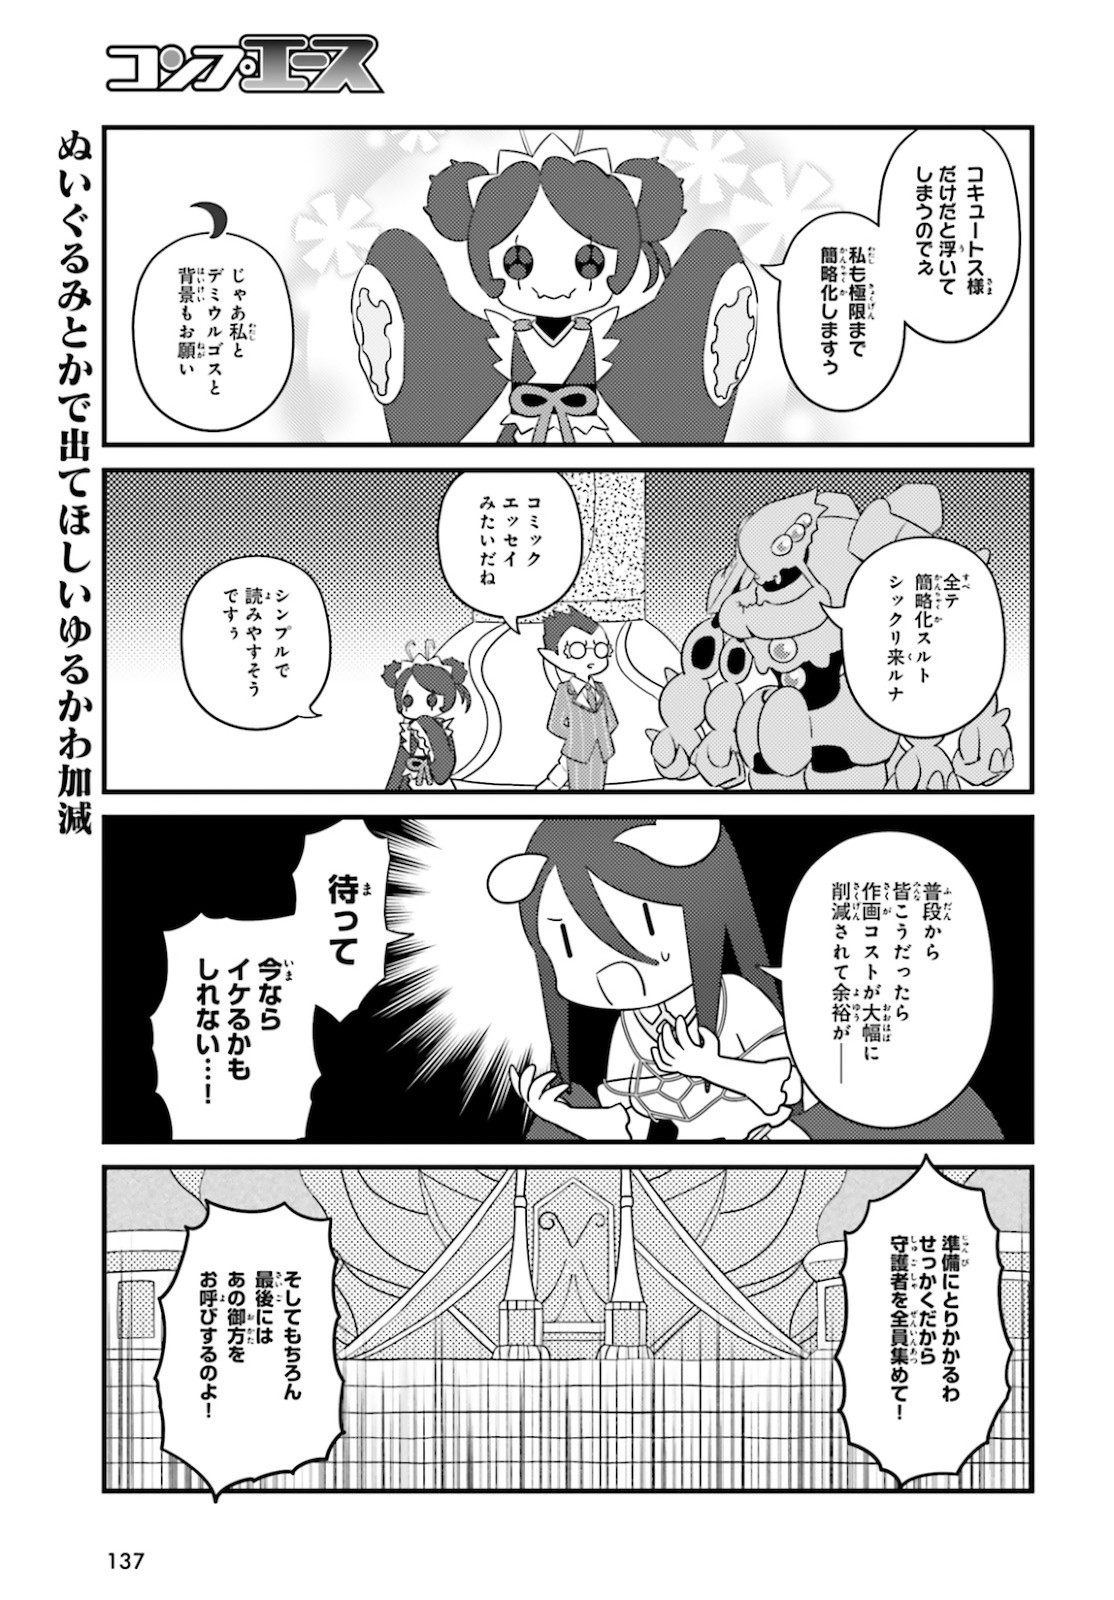 Overlord-Fushisha-no-Oh - Chapter 42 - Page 19